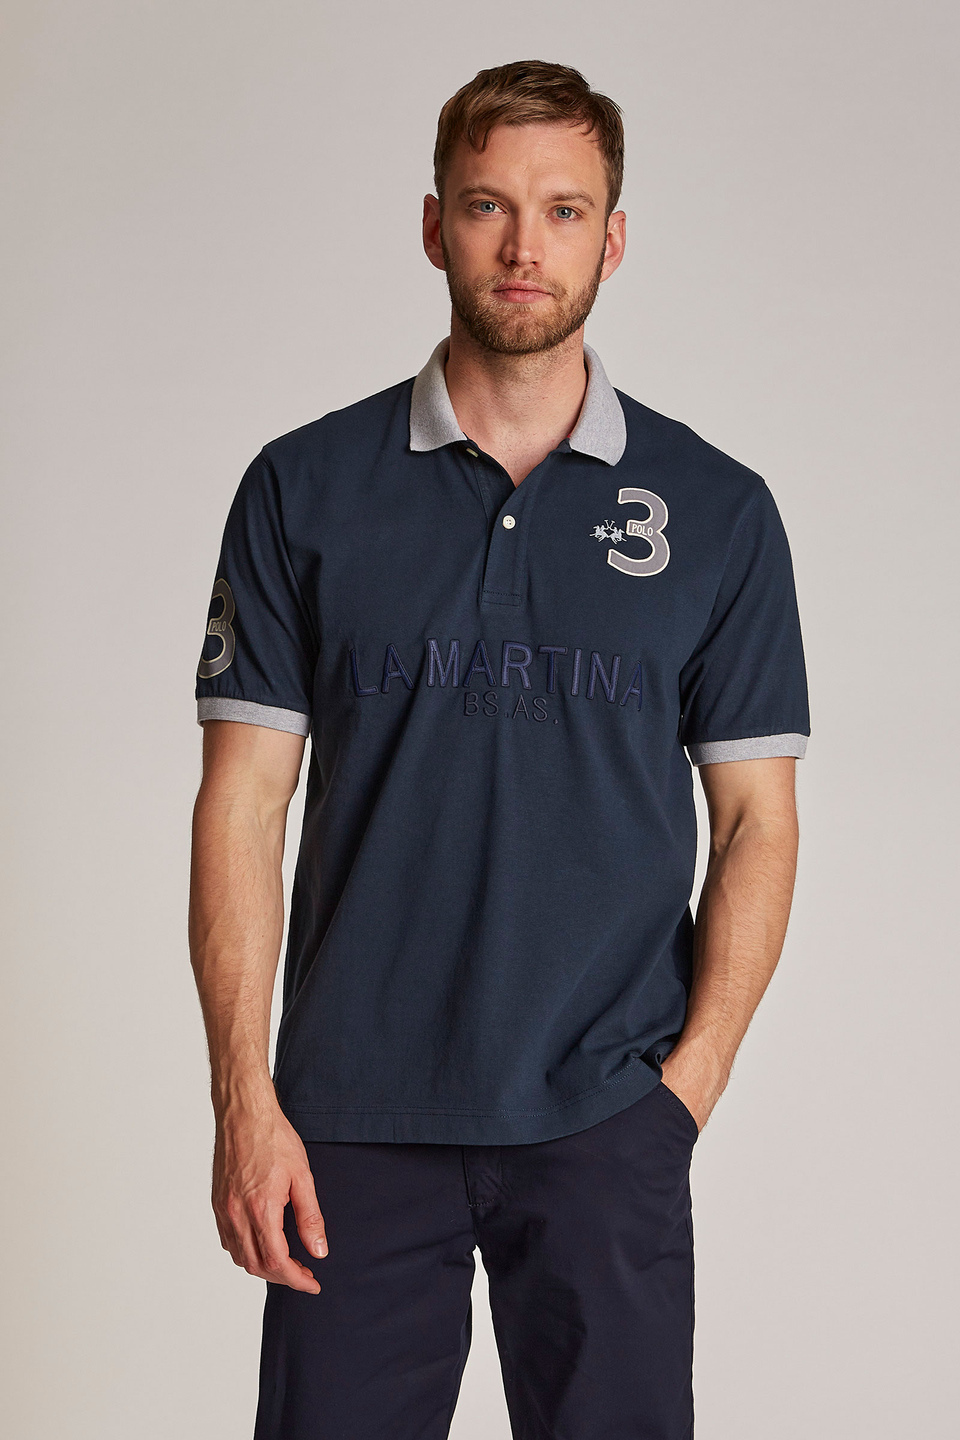 Einfarbiges Herren-Poloshirt mit kurzem Arm, oversized Modell | La Martina - Official Online Shop